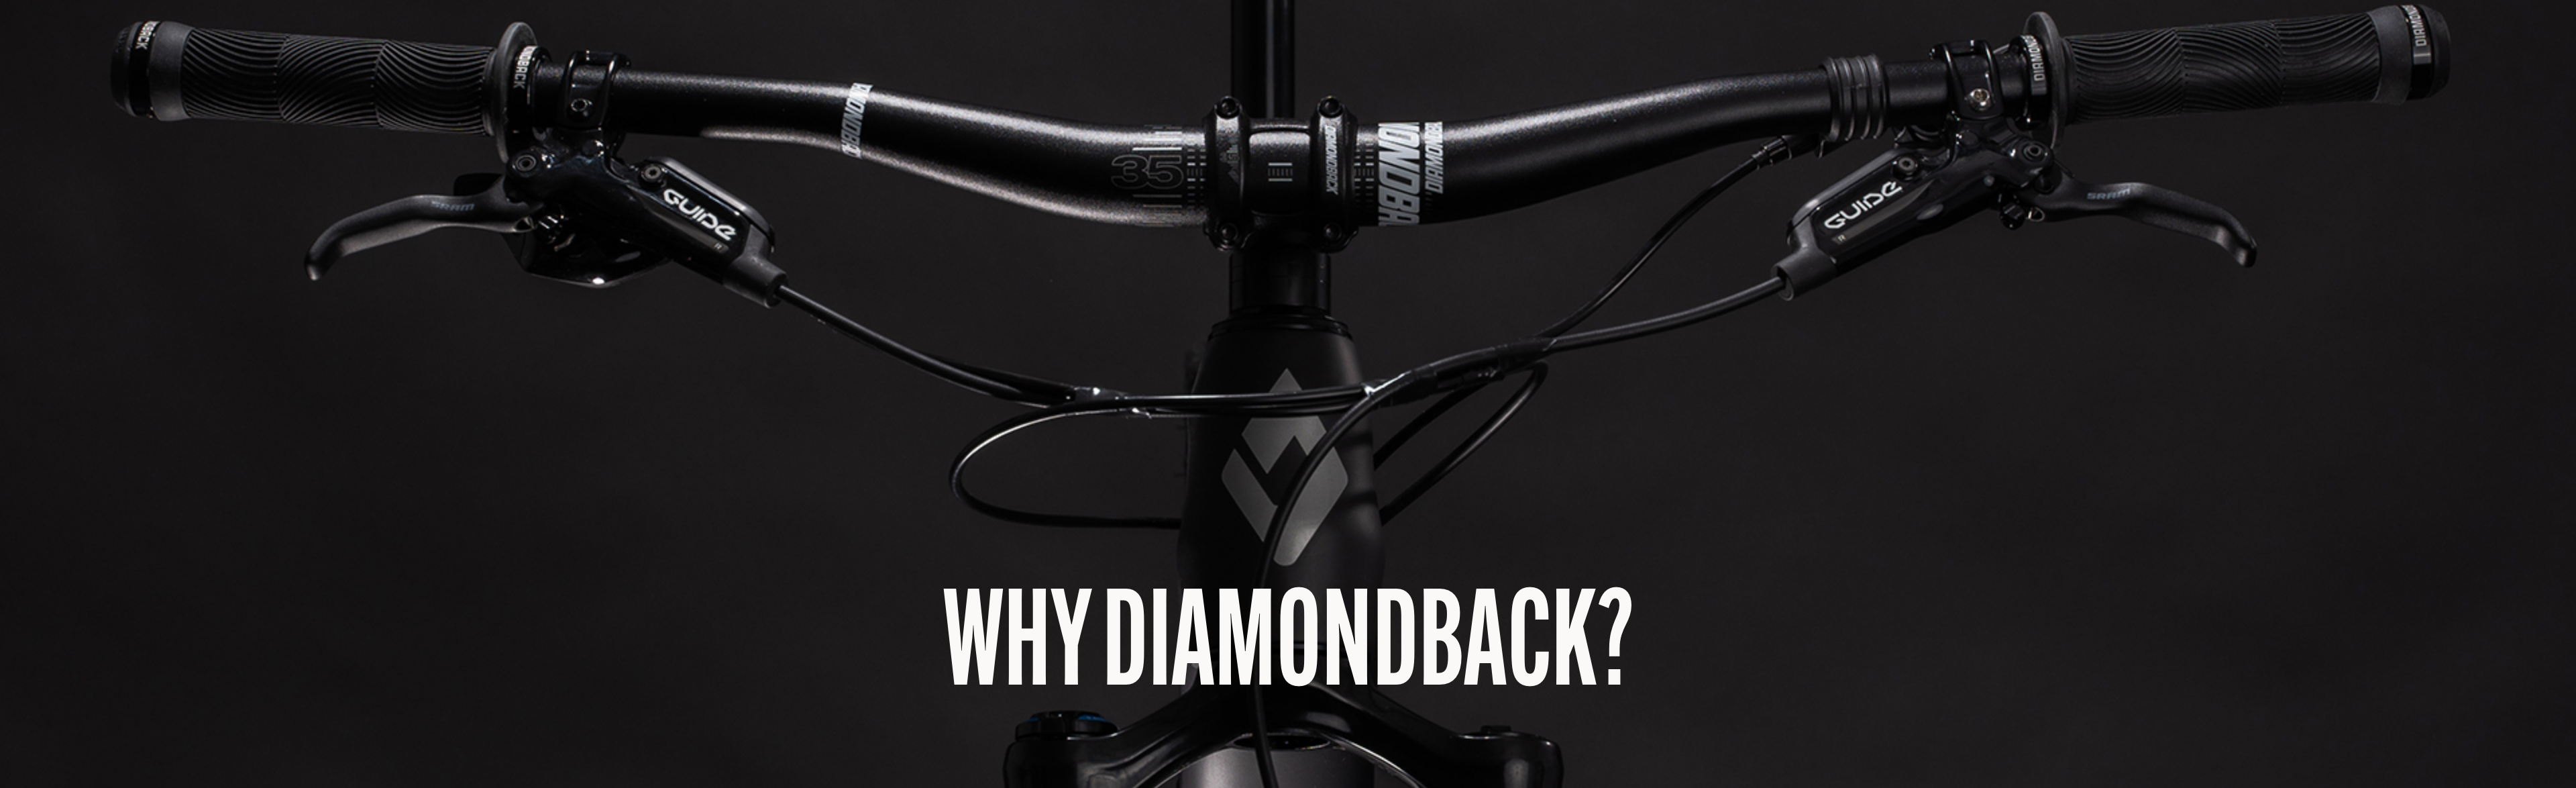 diamondback cycles